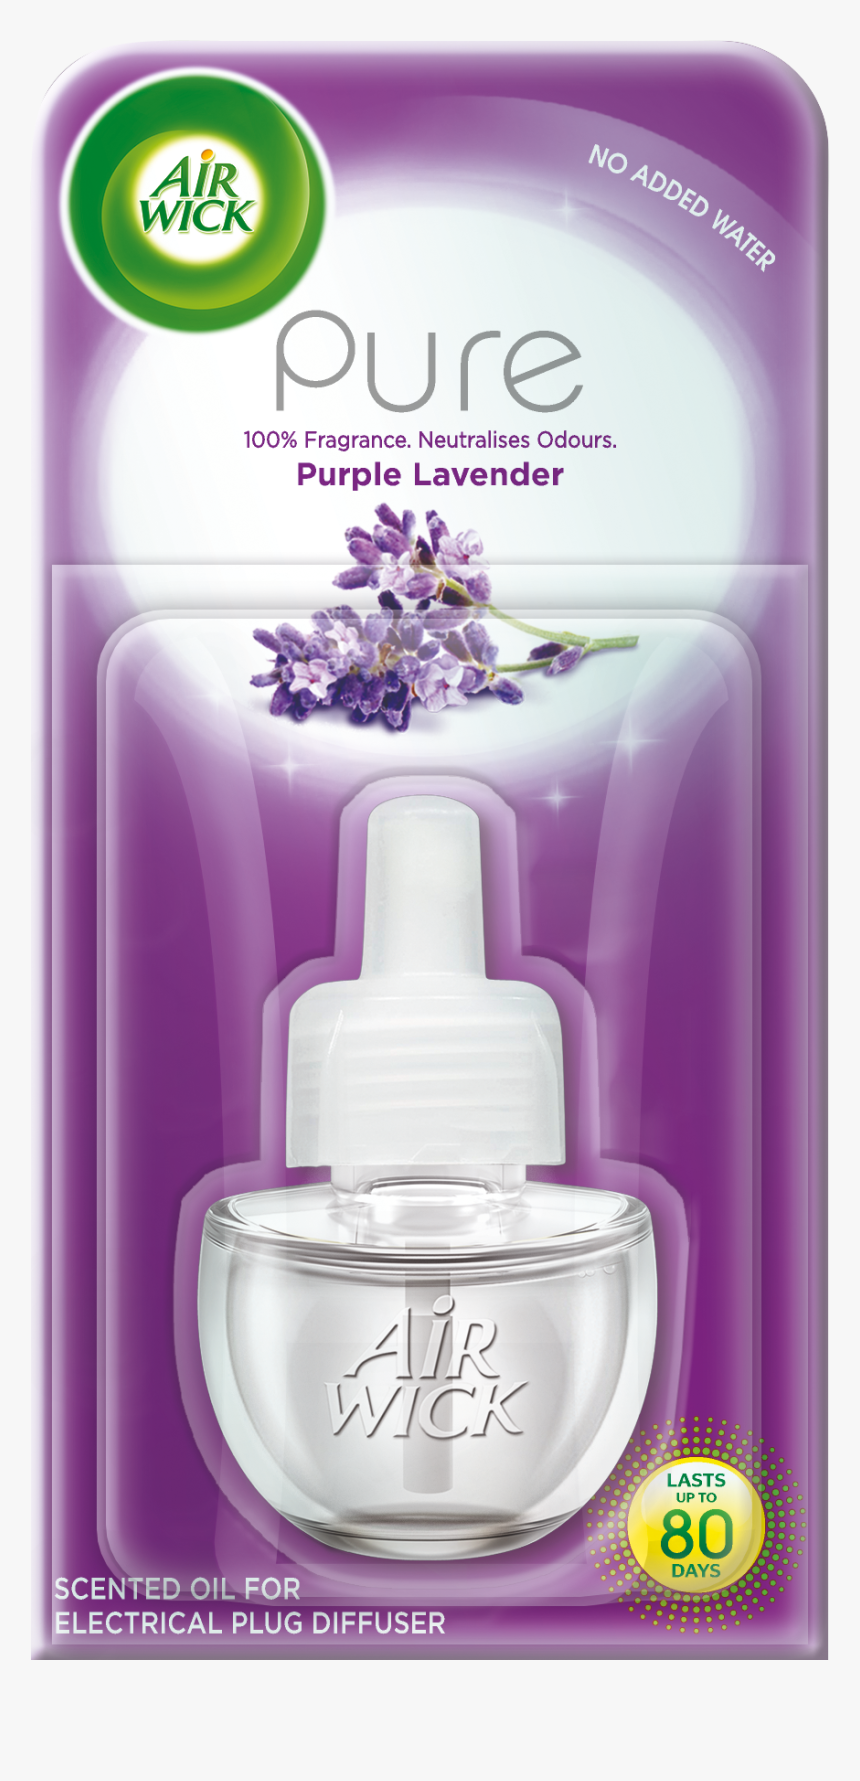 Lavender Plant Png, Transparent Png, Free Download